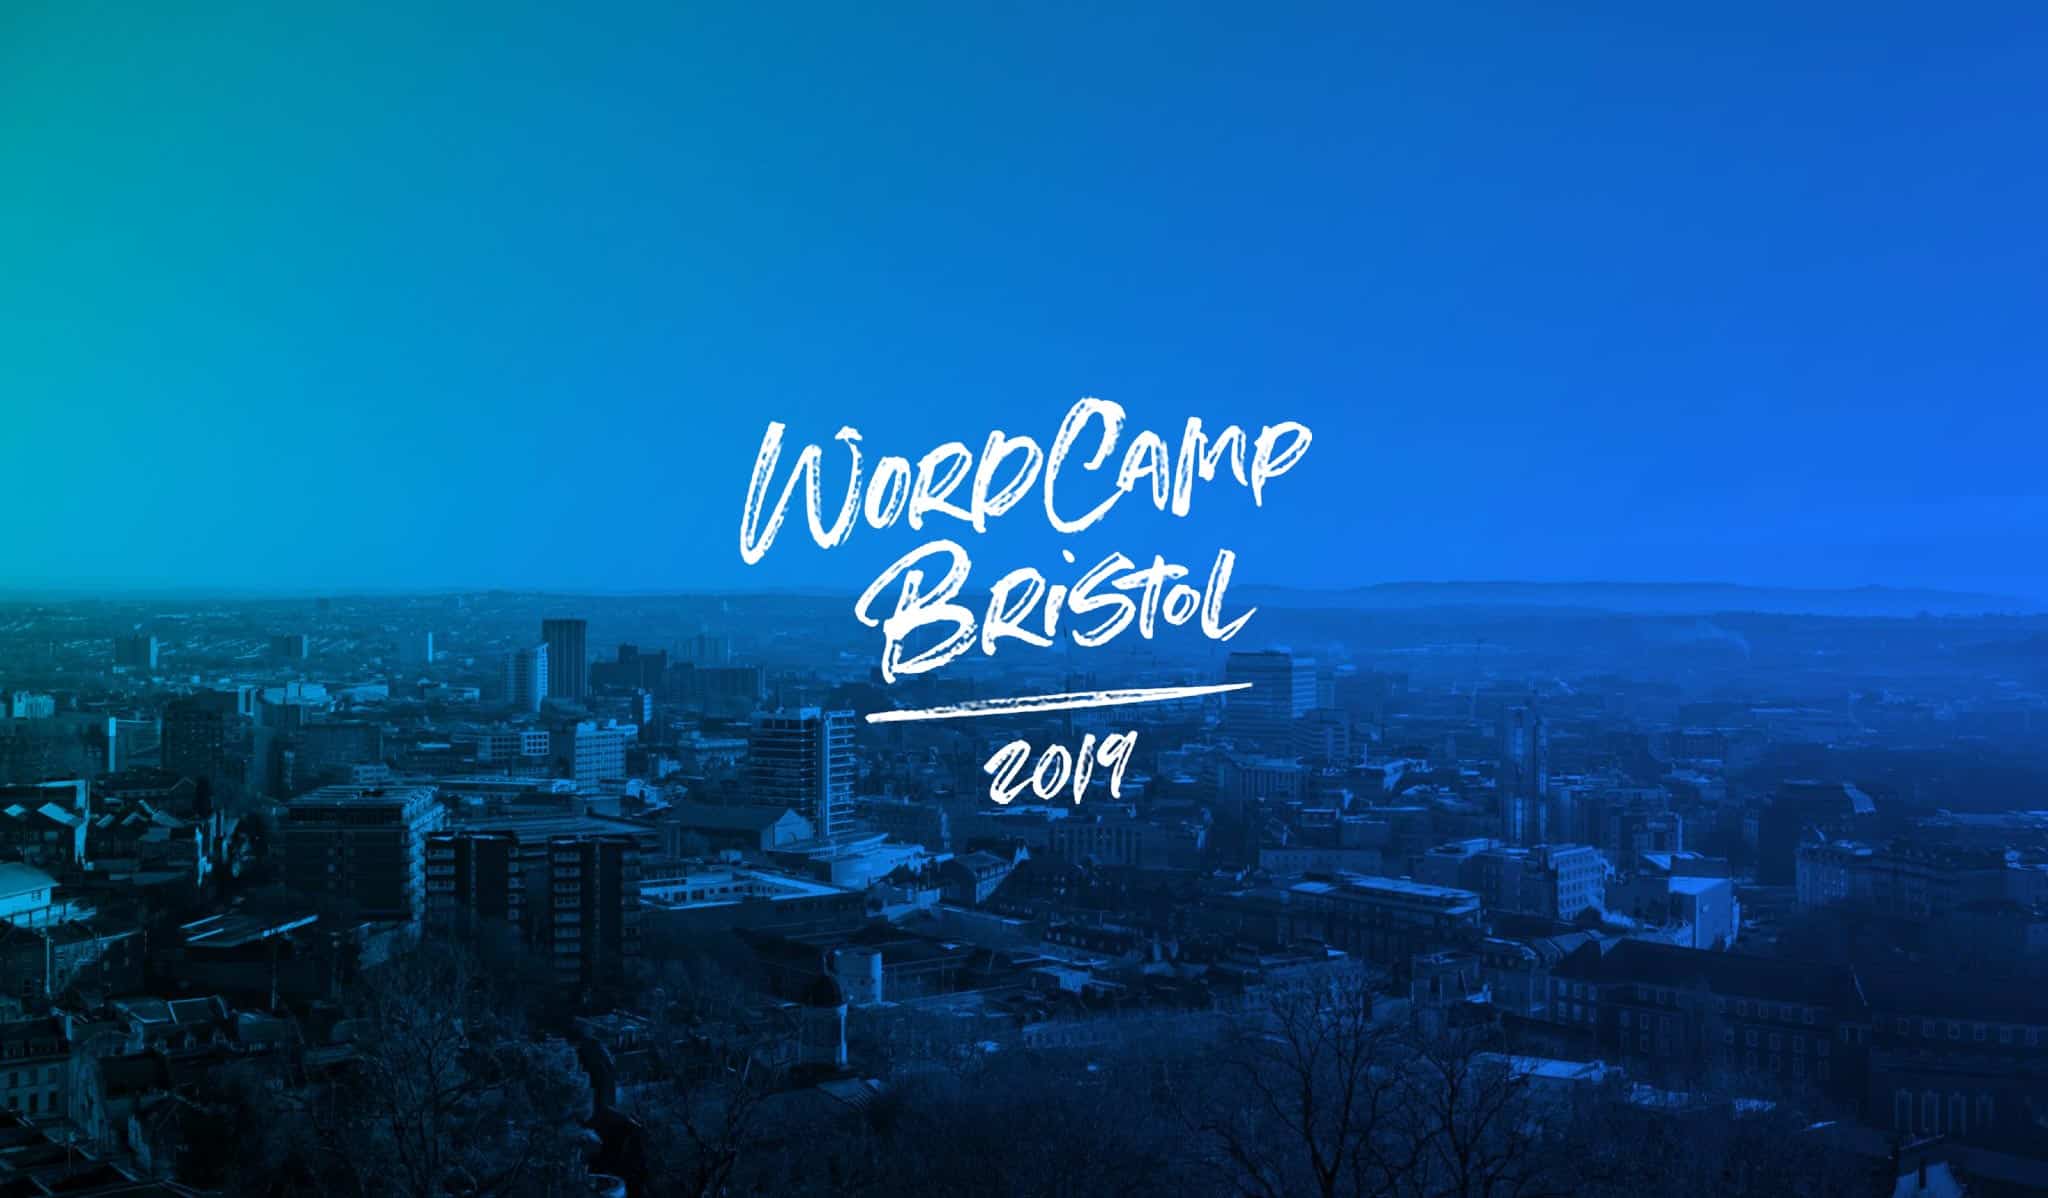 Scott announced as speaker at WordCamp Bristol in May.